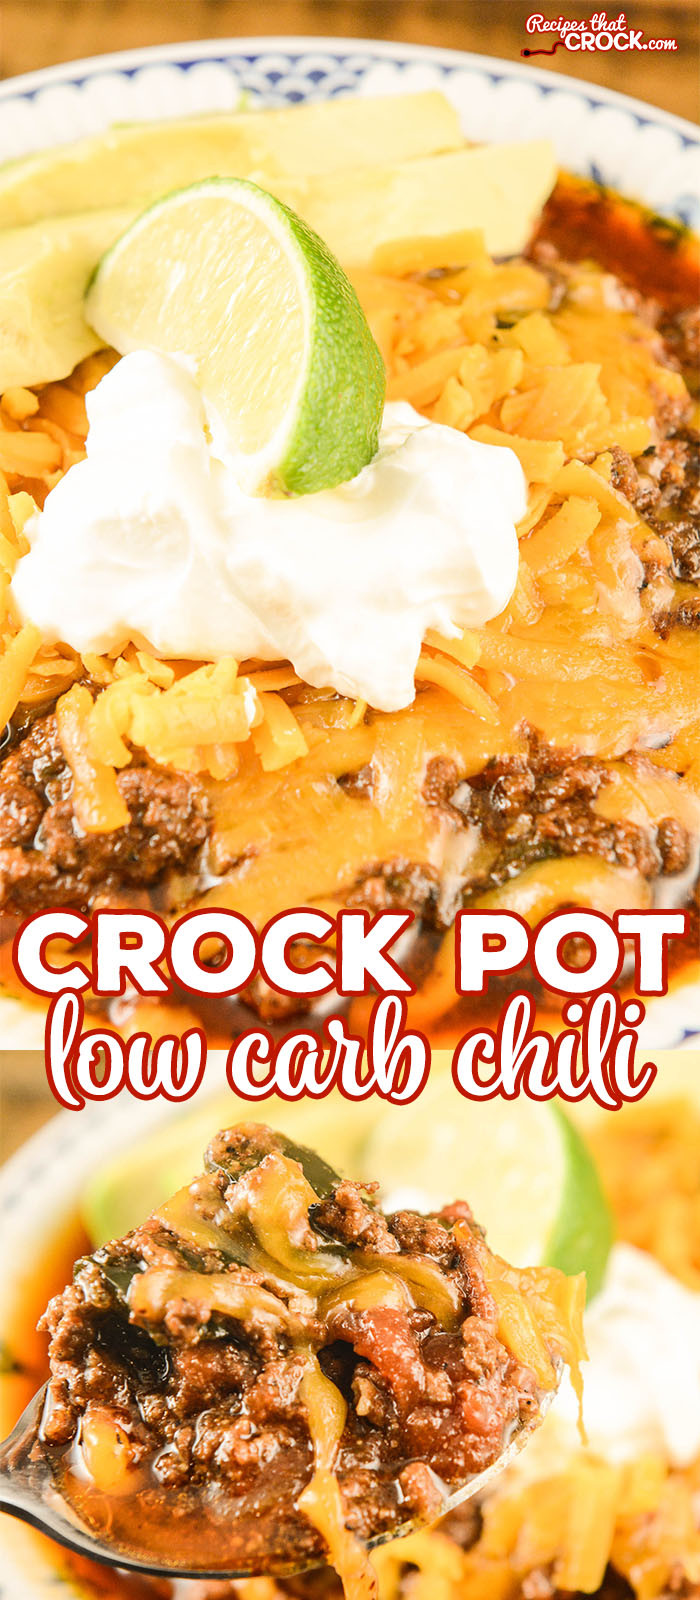 Low Carb Chili Recipes
 Crock Pot Low Carb Chili Recipes That Crock